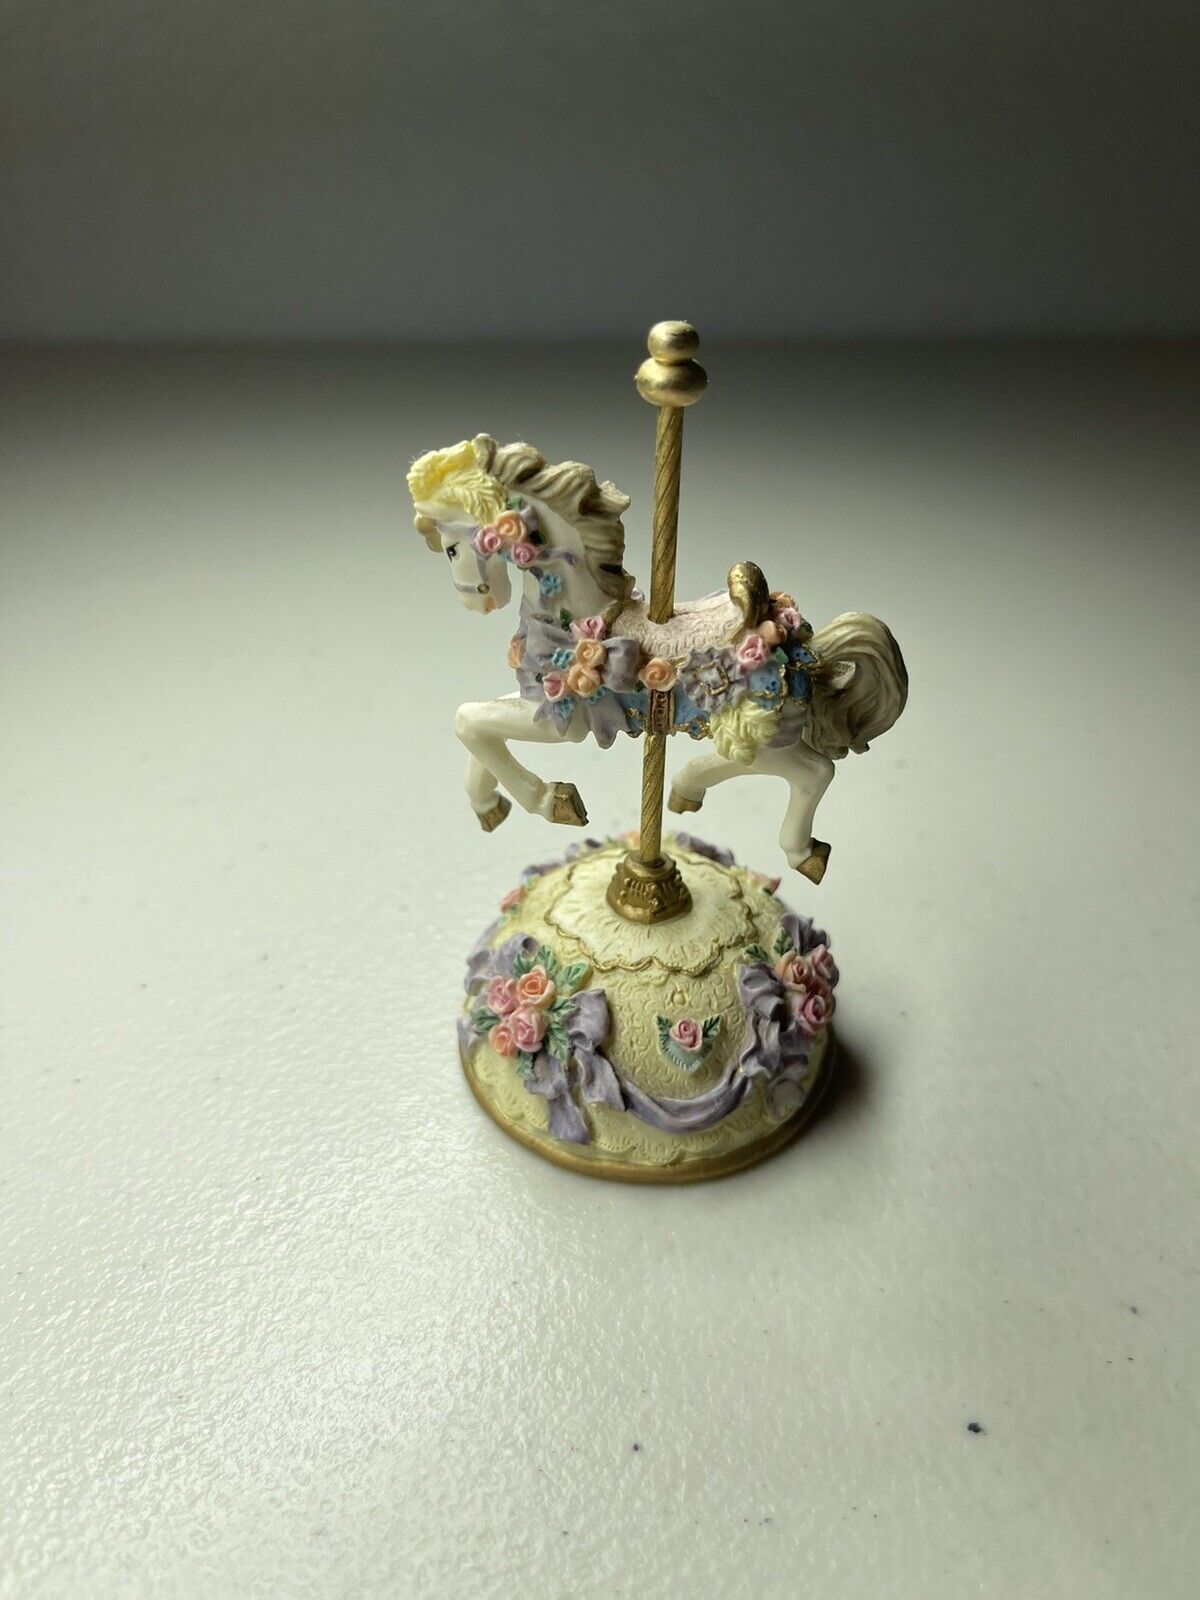 1997 Westland Miniature Musical Carousel Horse Plays “Favorite Things”